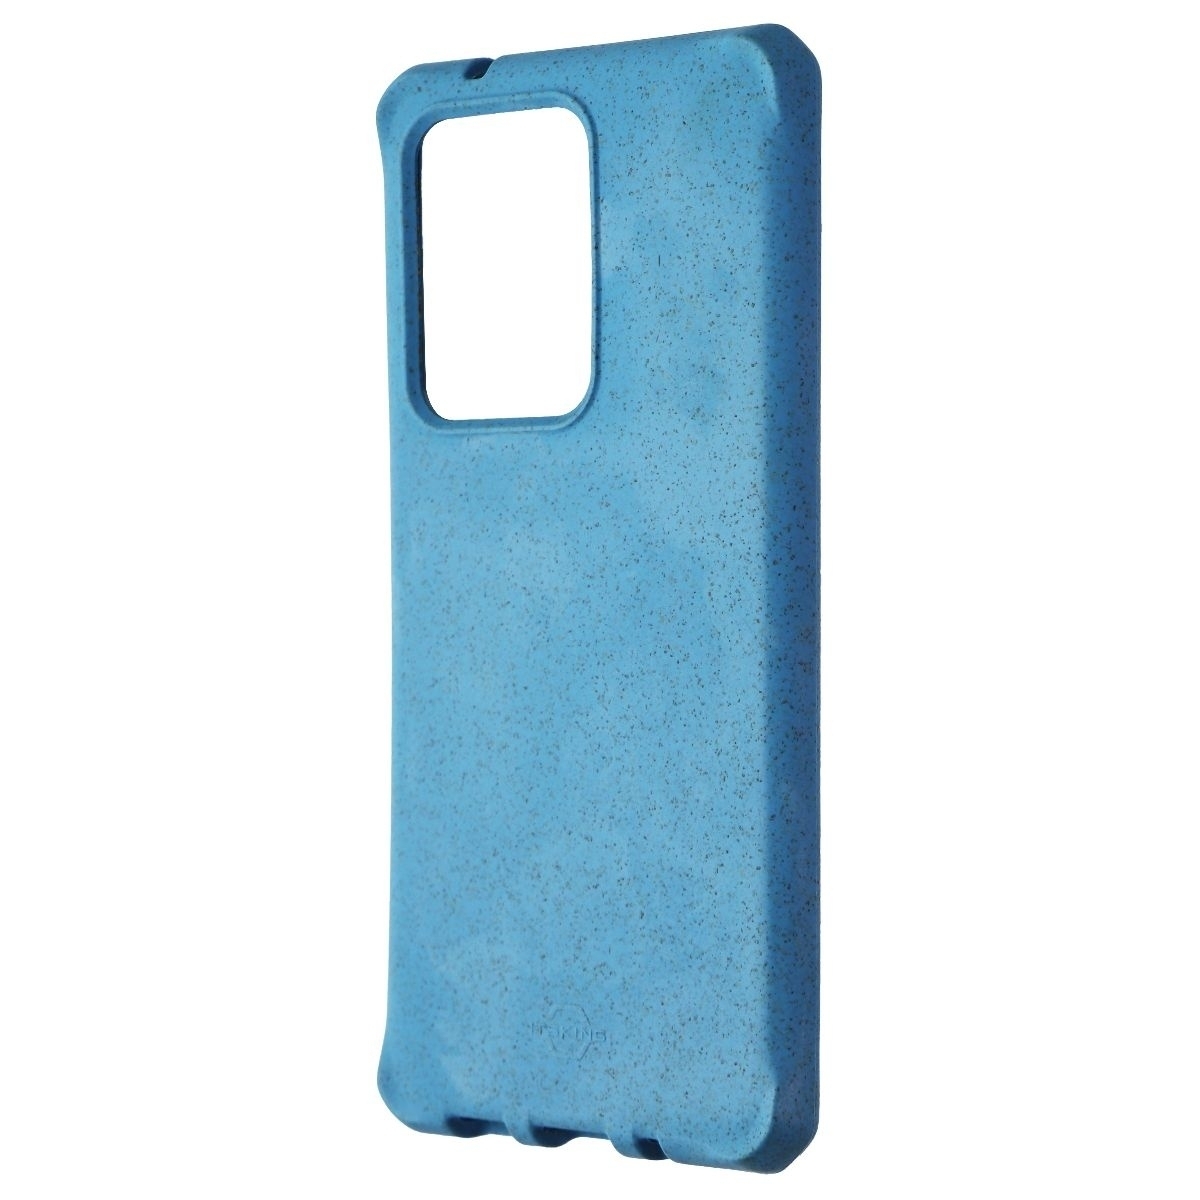 ITSKINS Feroniabio Series Case For Samsung S20 Ultra 5G - Blue